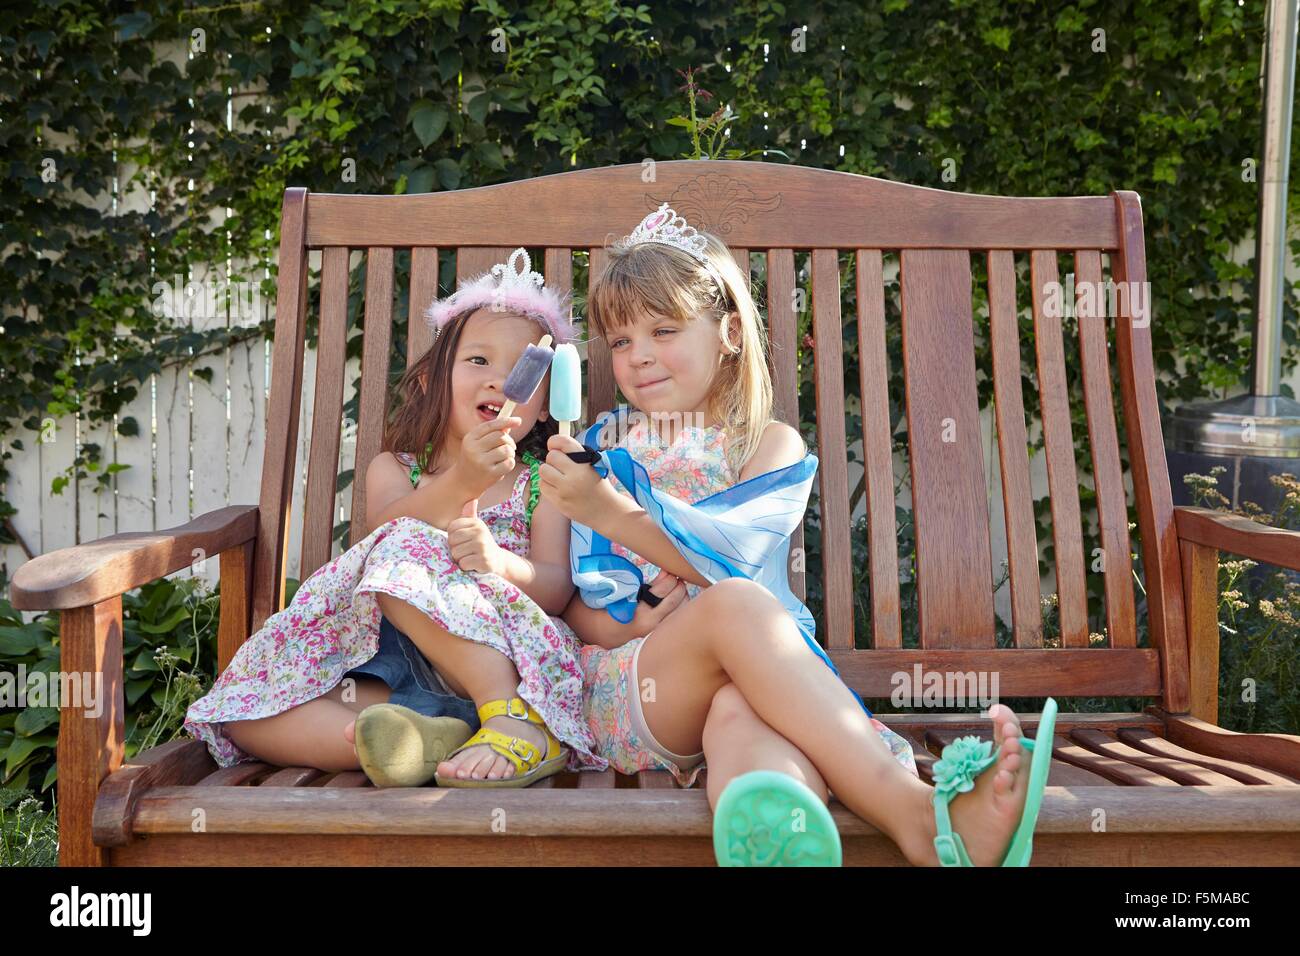 Girls enjoying ice lolly on garden bench Stock Photo